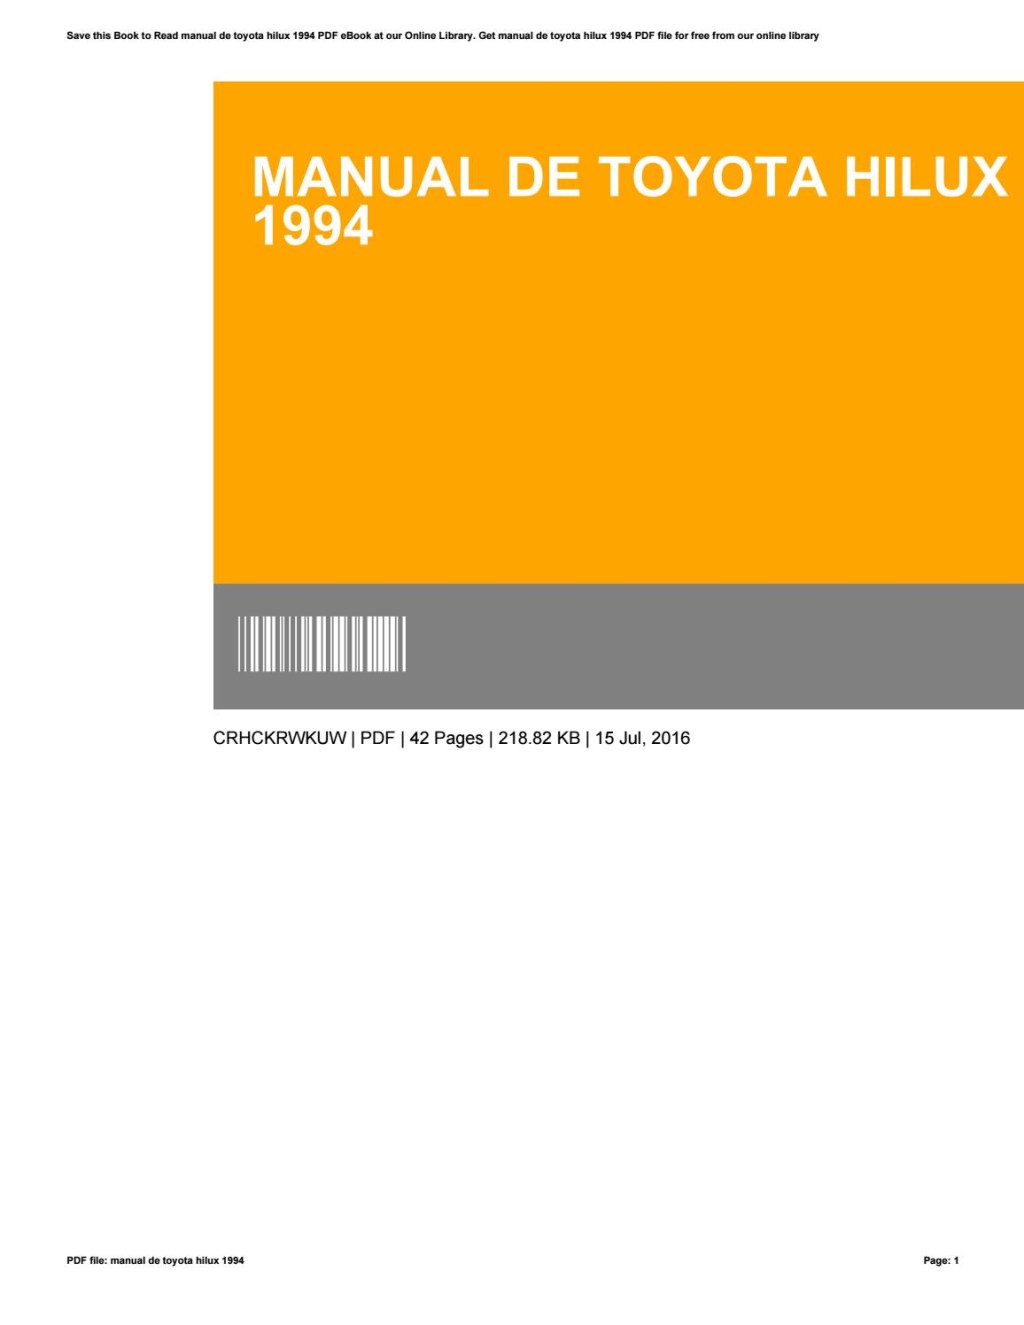 Picture of: Manual de toyota hilux  by TatumMorris – Issuu